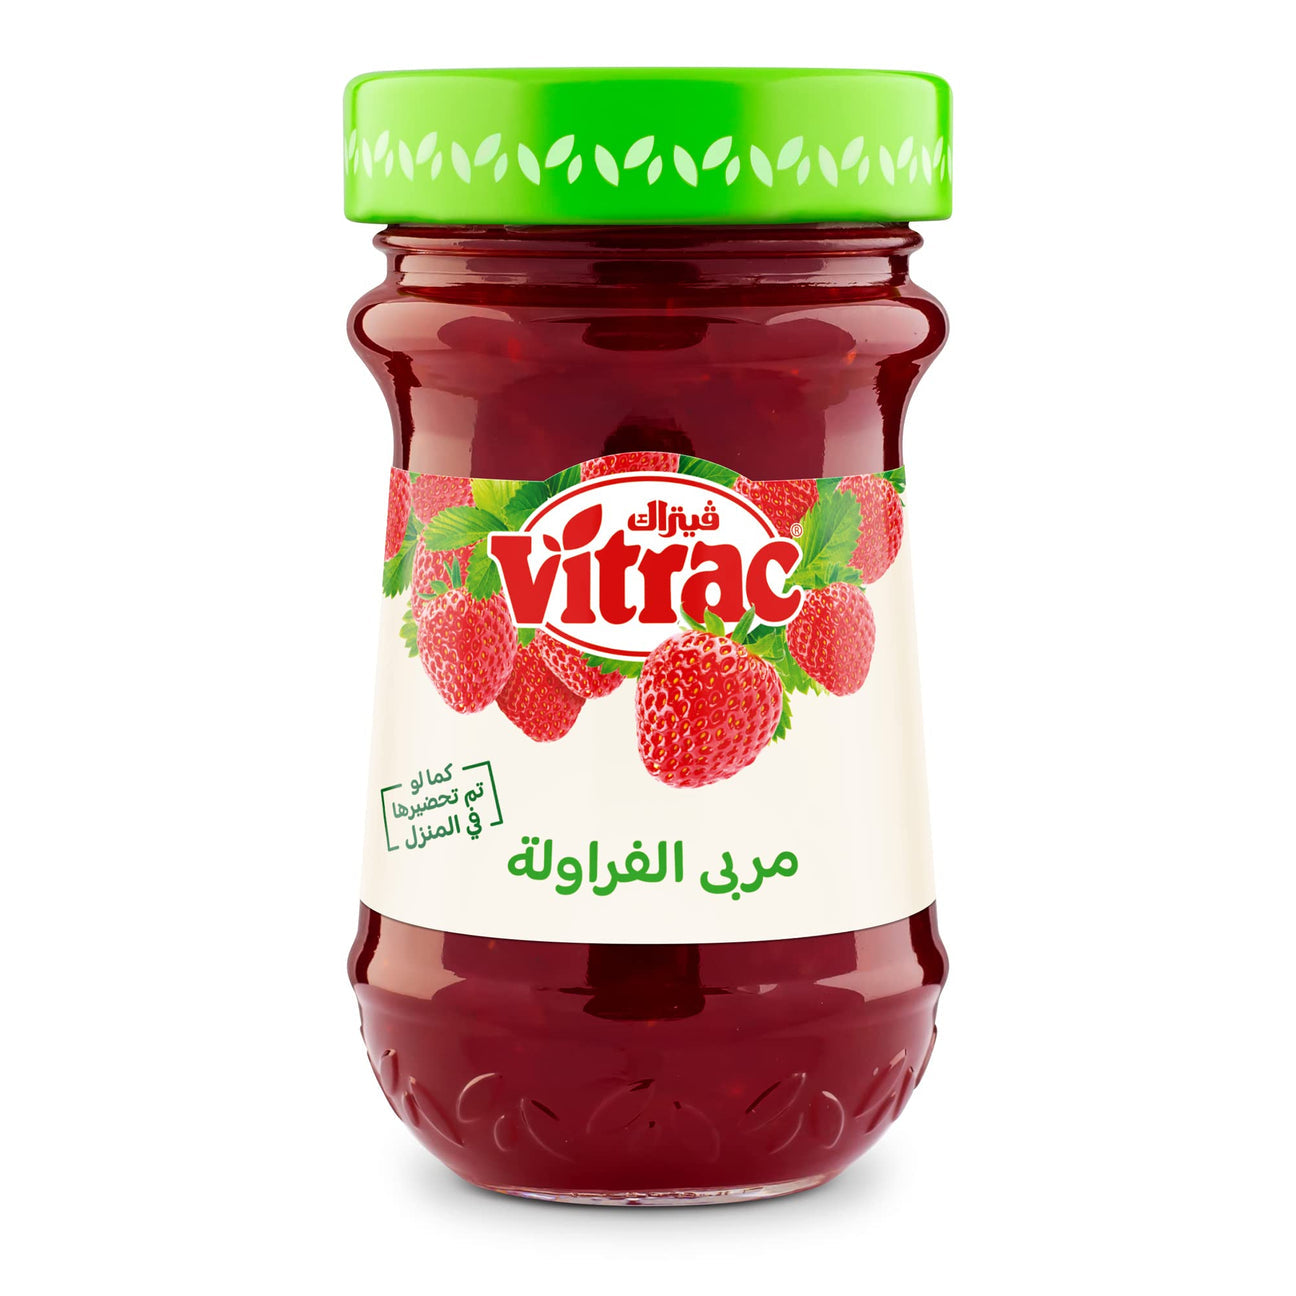 Vitrac strawberry Jam Spread